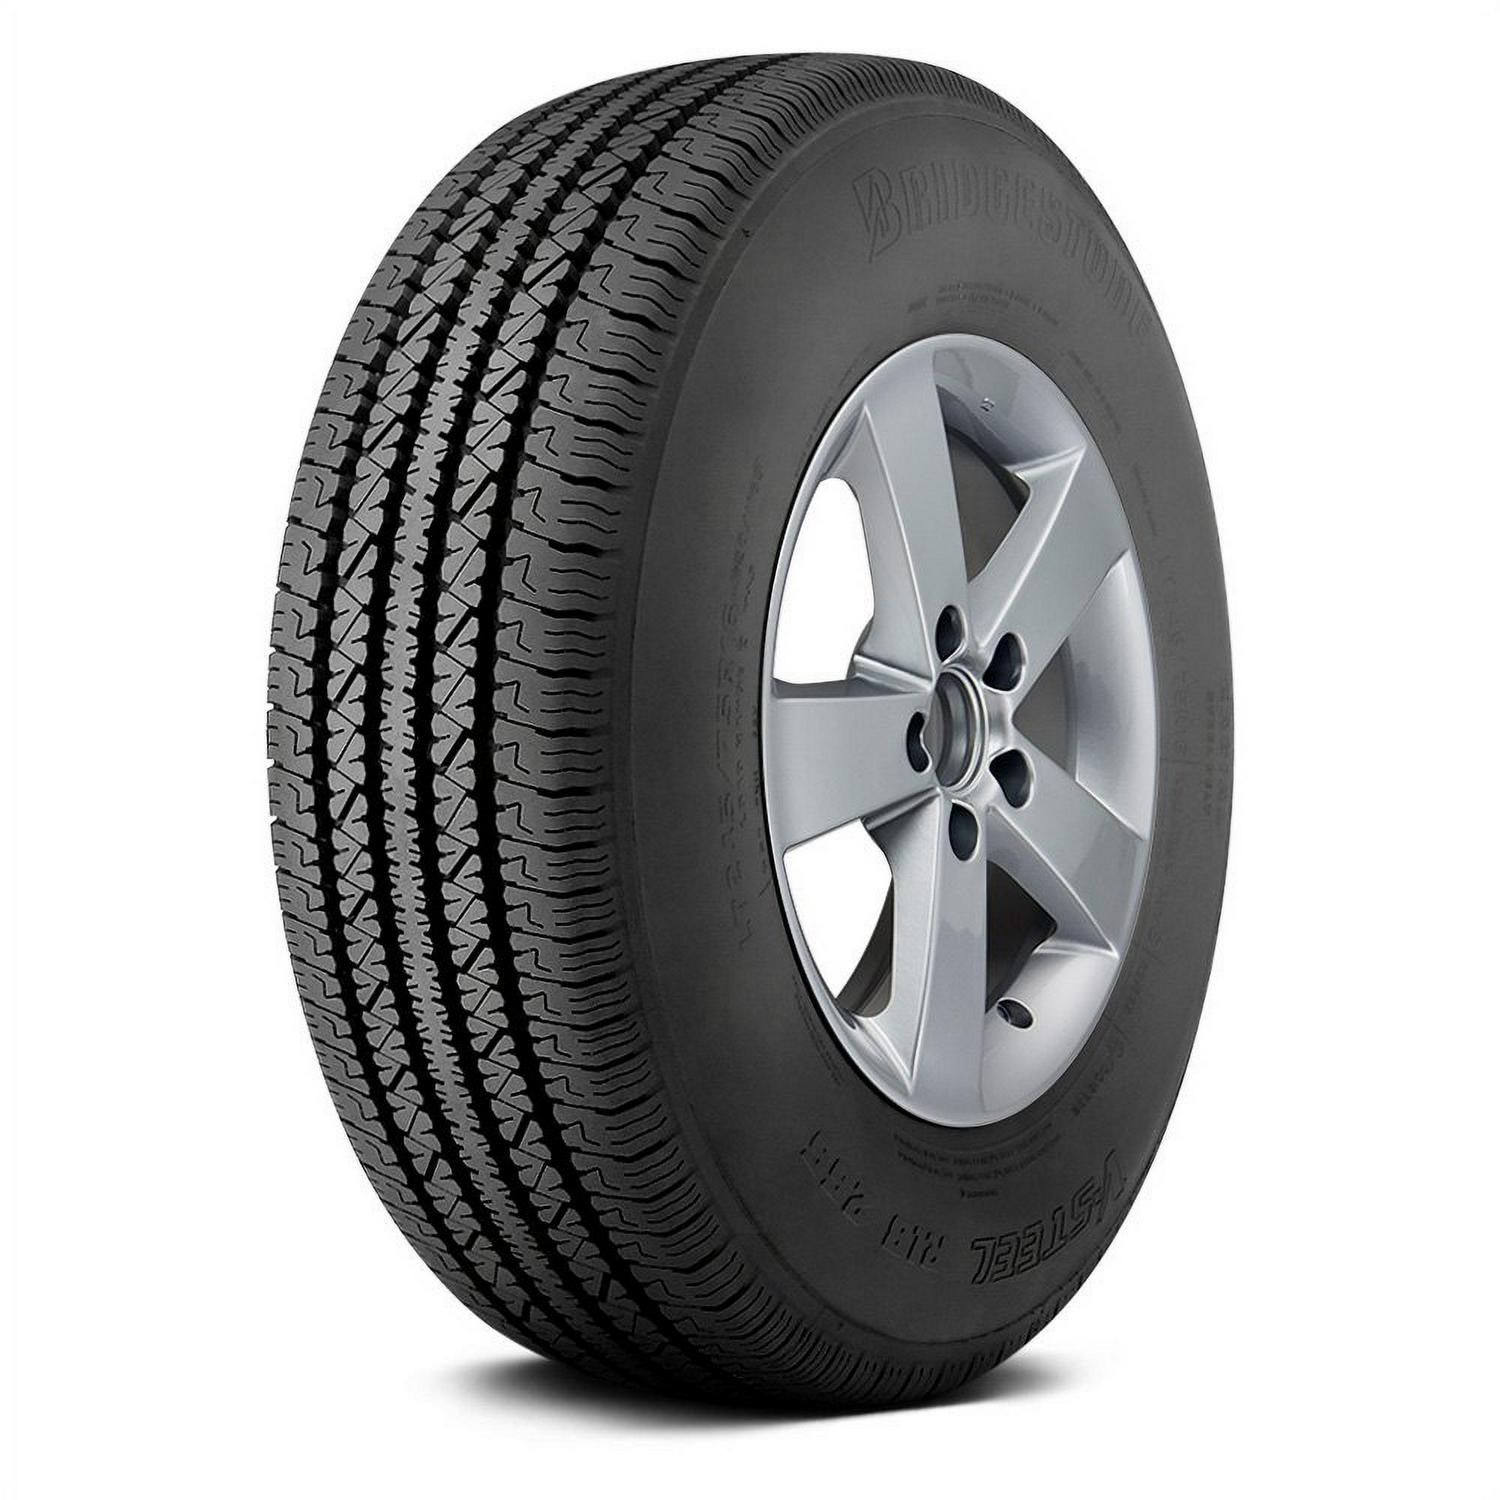 Bridgestone R265 245/75R16 120 S Tire